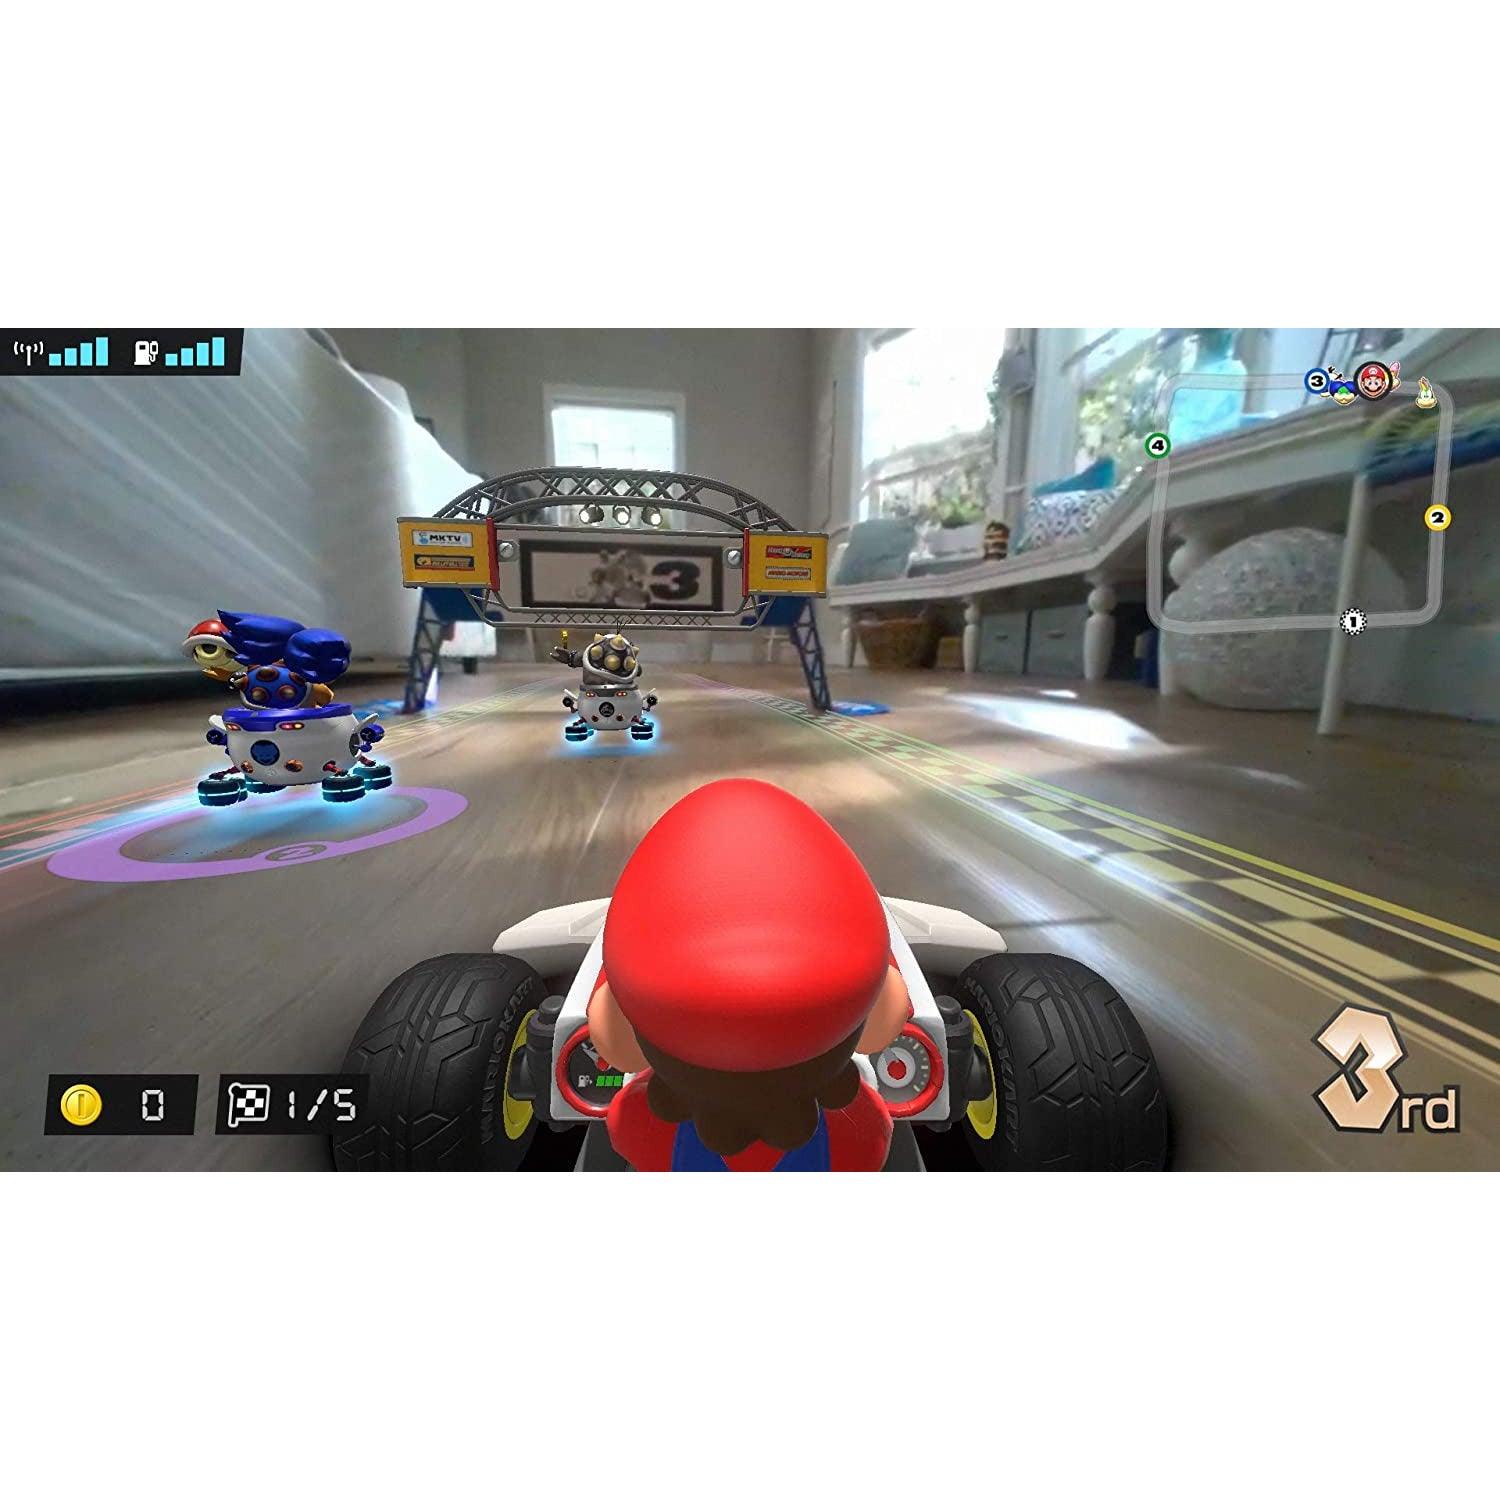 Mario Kart Live Home Circuit -Mario Set - Nintendo Switch - BumbleToys - 4+ Years, 5-7 Years, 8-13 Years, Boys, Pre-Order, Super Mario